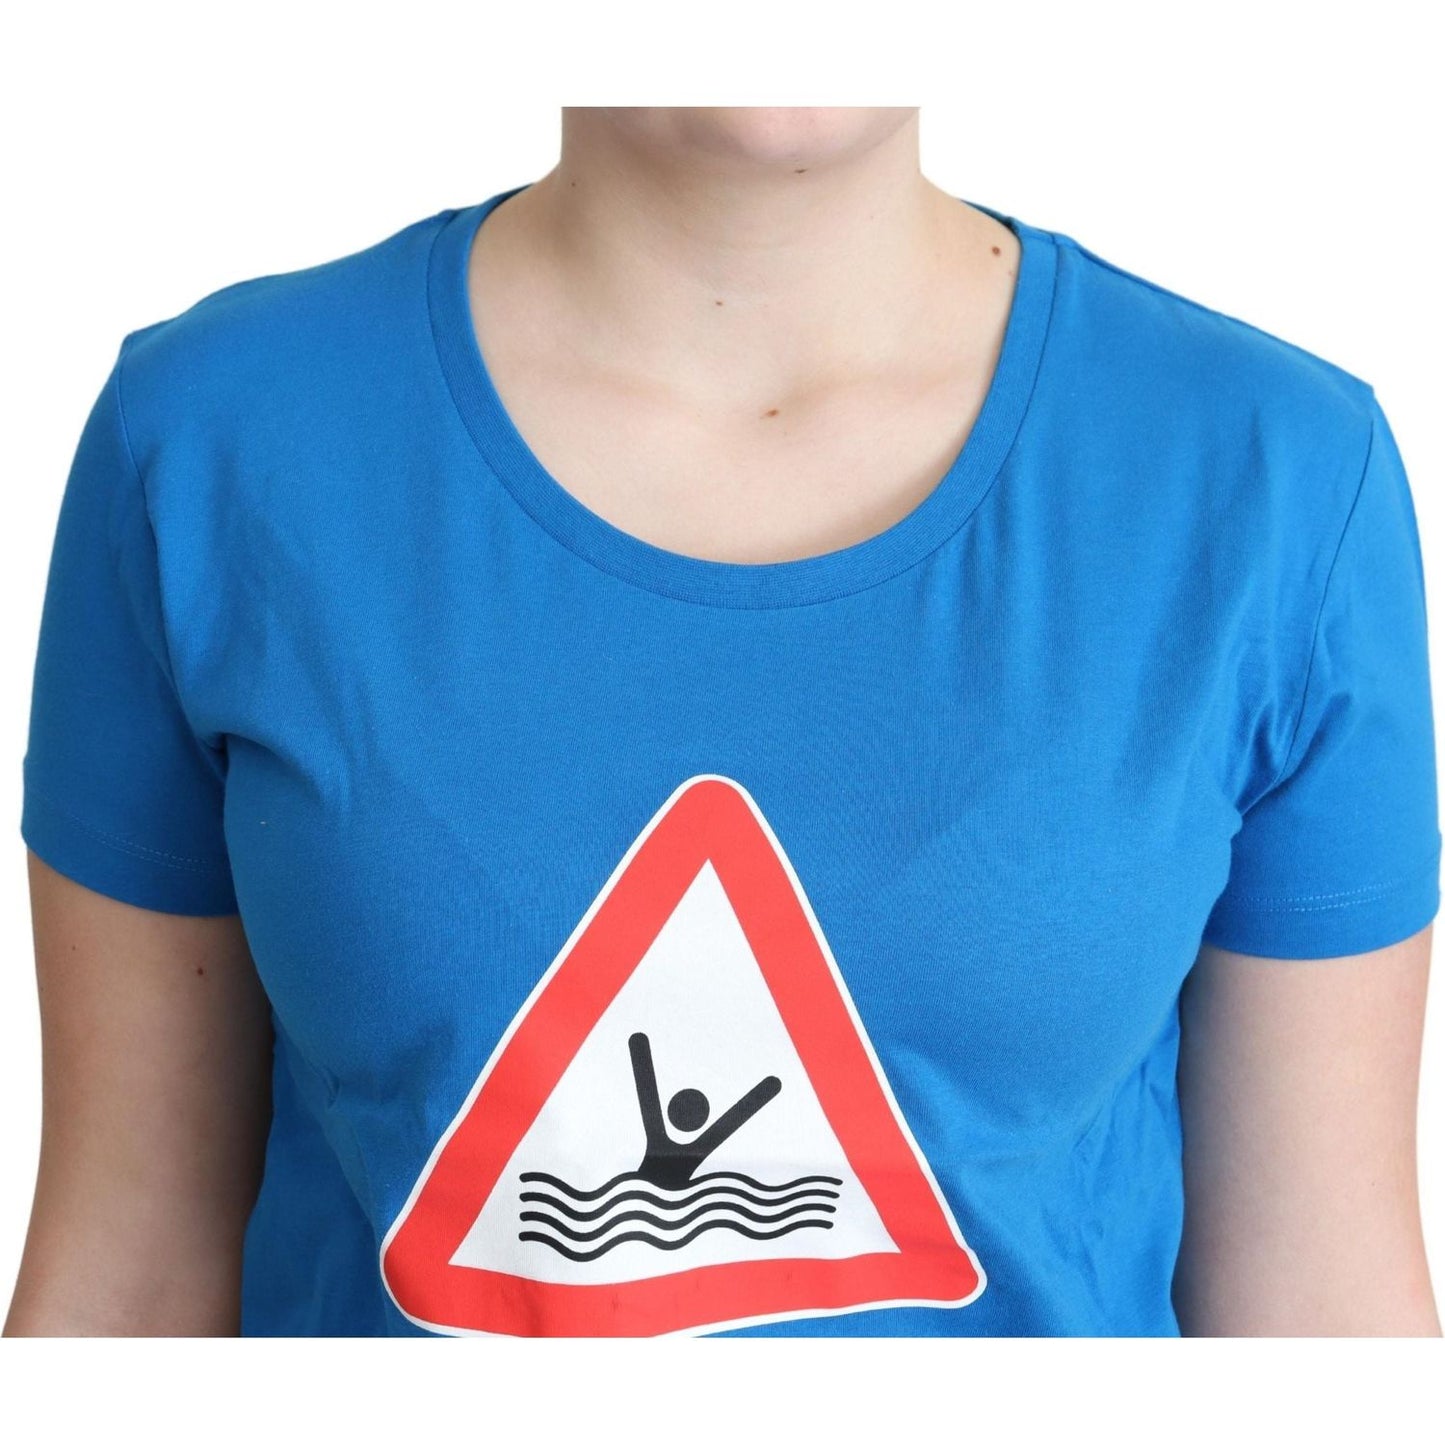 Moschino Chic Triangle Graphic Cotton Tee blue-cotton-swim-graphic-triangle-t-shirt IMG_0956-2-scaled-0ee6b93a-f1d.jpg